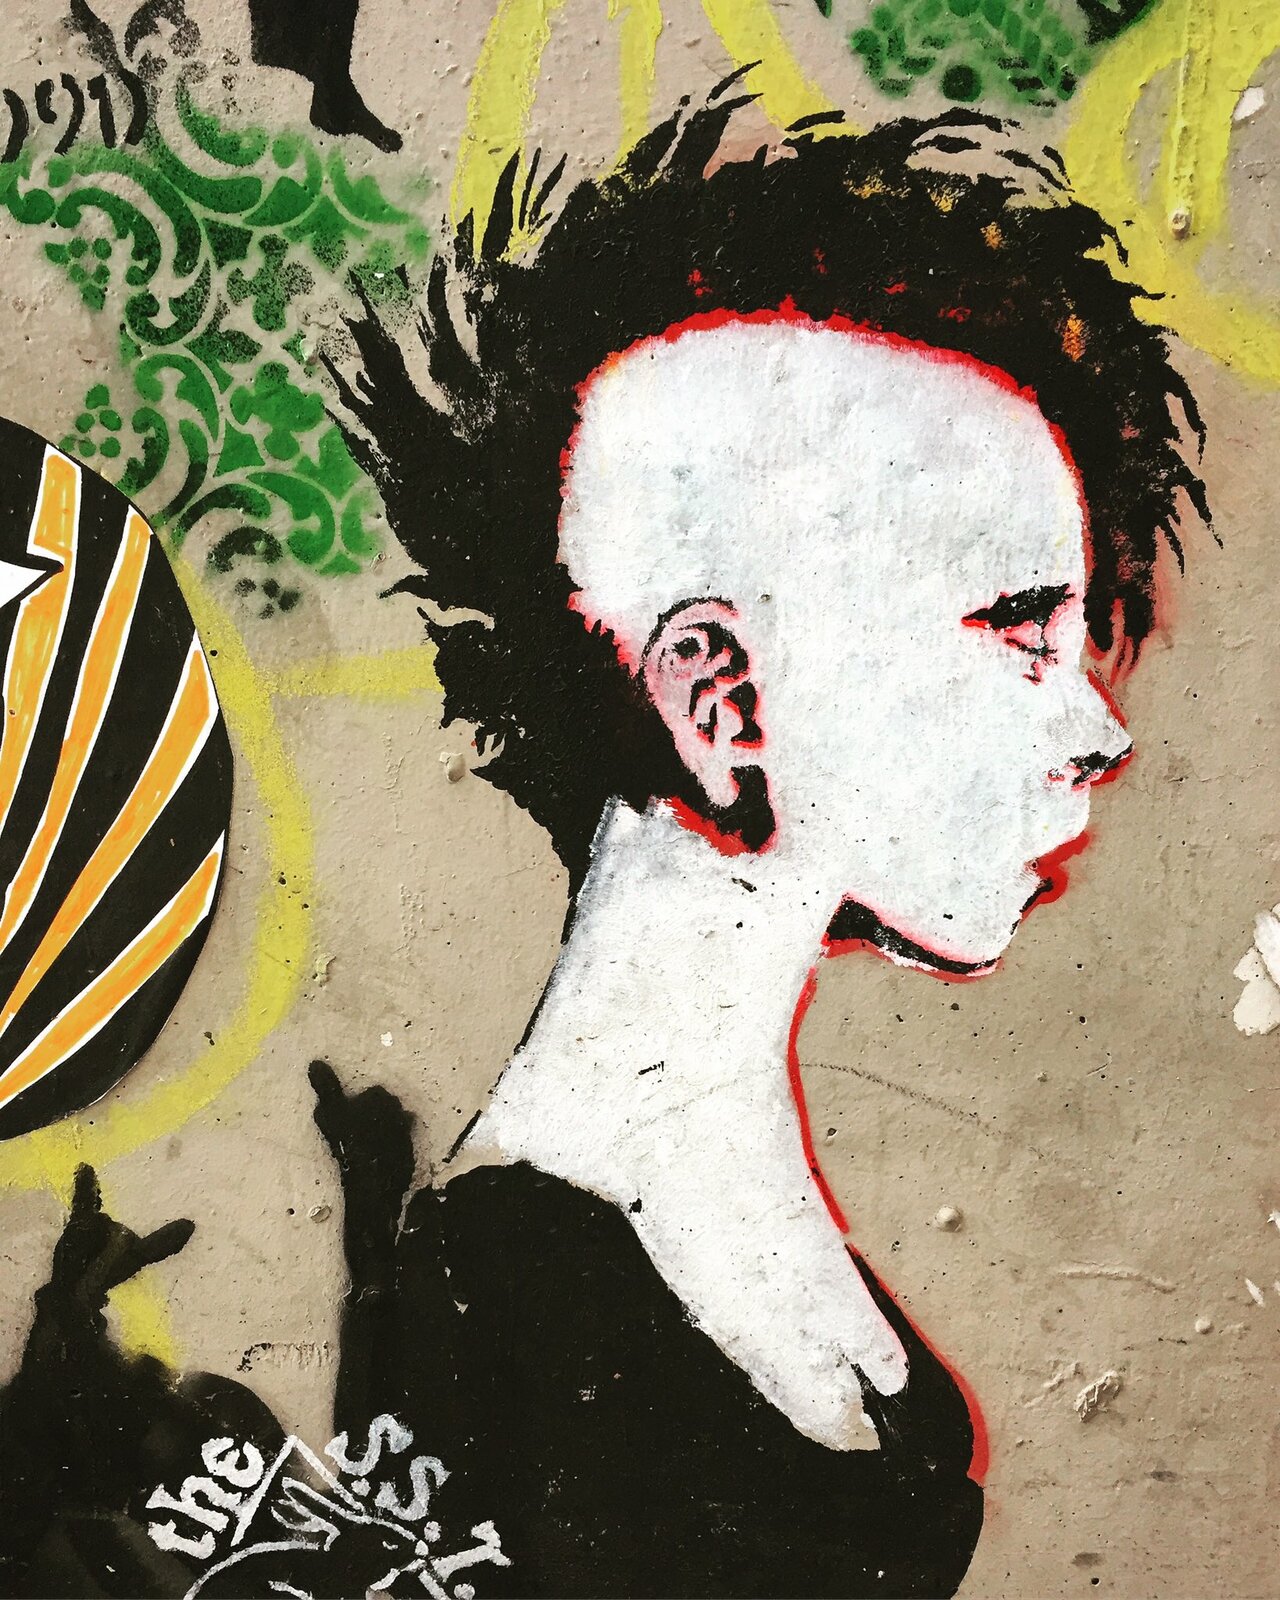 NO FUTURE by #SSTDivision #stencil #punk #nofuture #streetart #graffiti #graff #spray #bombing #sprayart #wall #lelavomatik #paris https://t.co/y5ihKw9cte